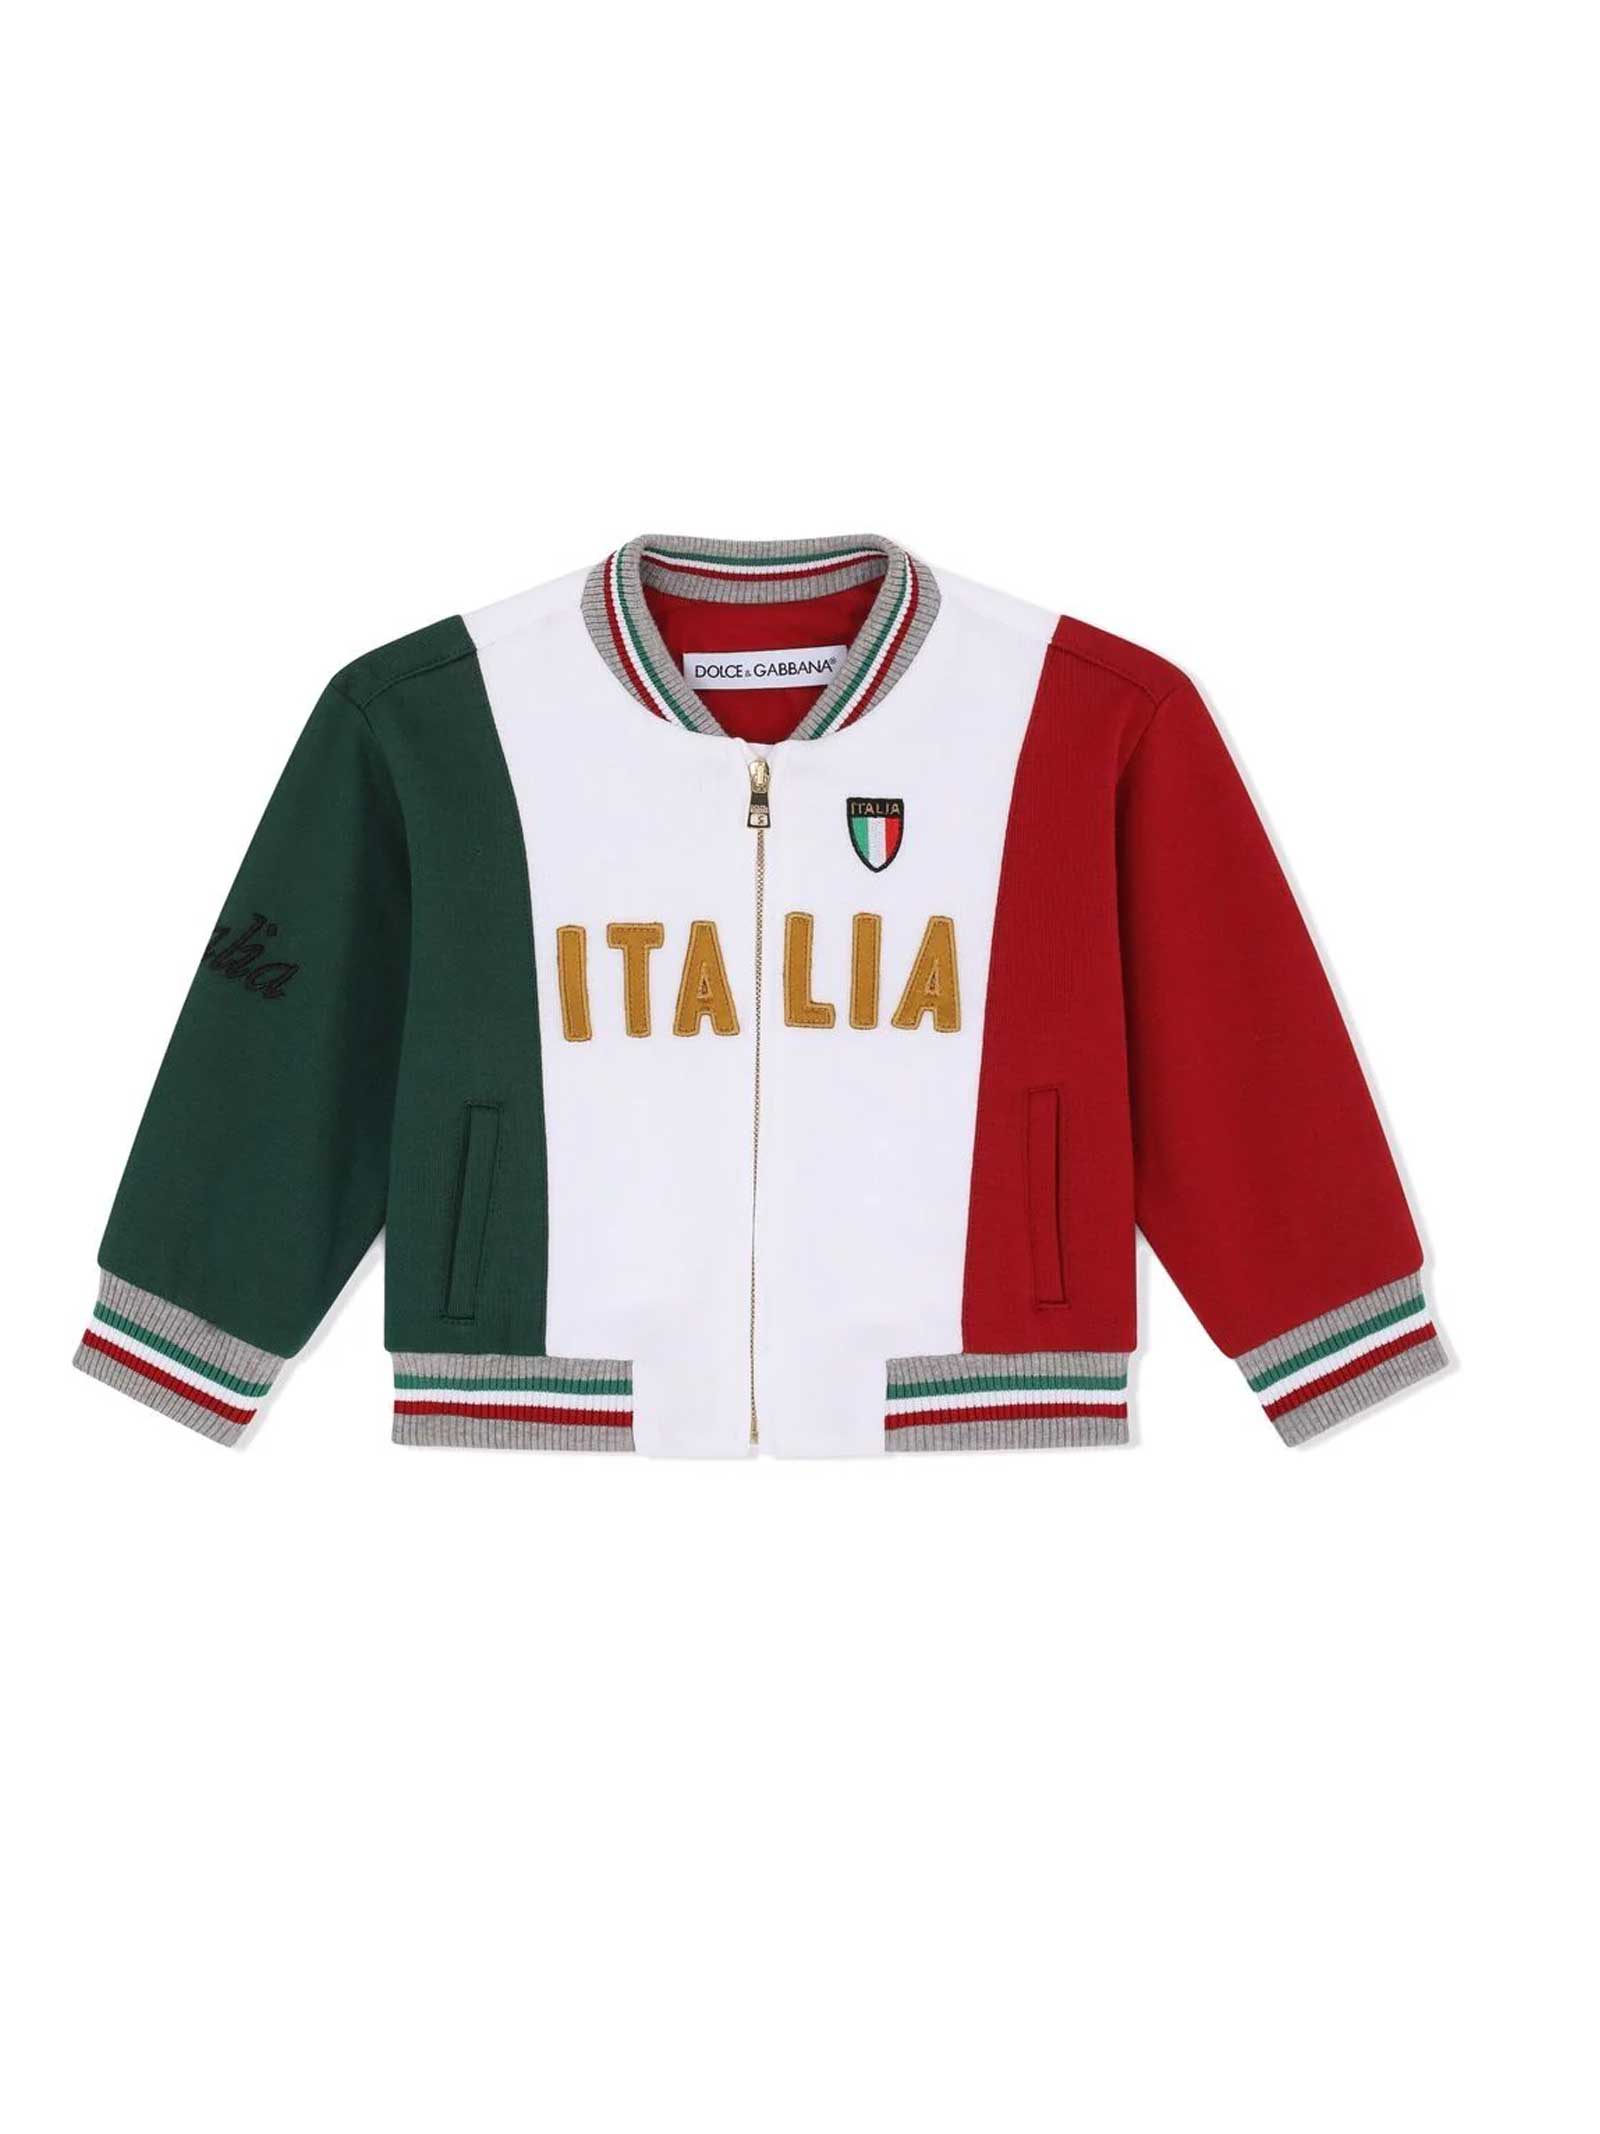 Dolce & Gabbana Italy Print Lightweight Jacket Dolce & gabbana Kids